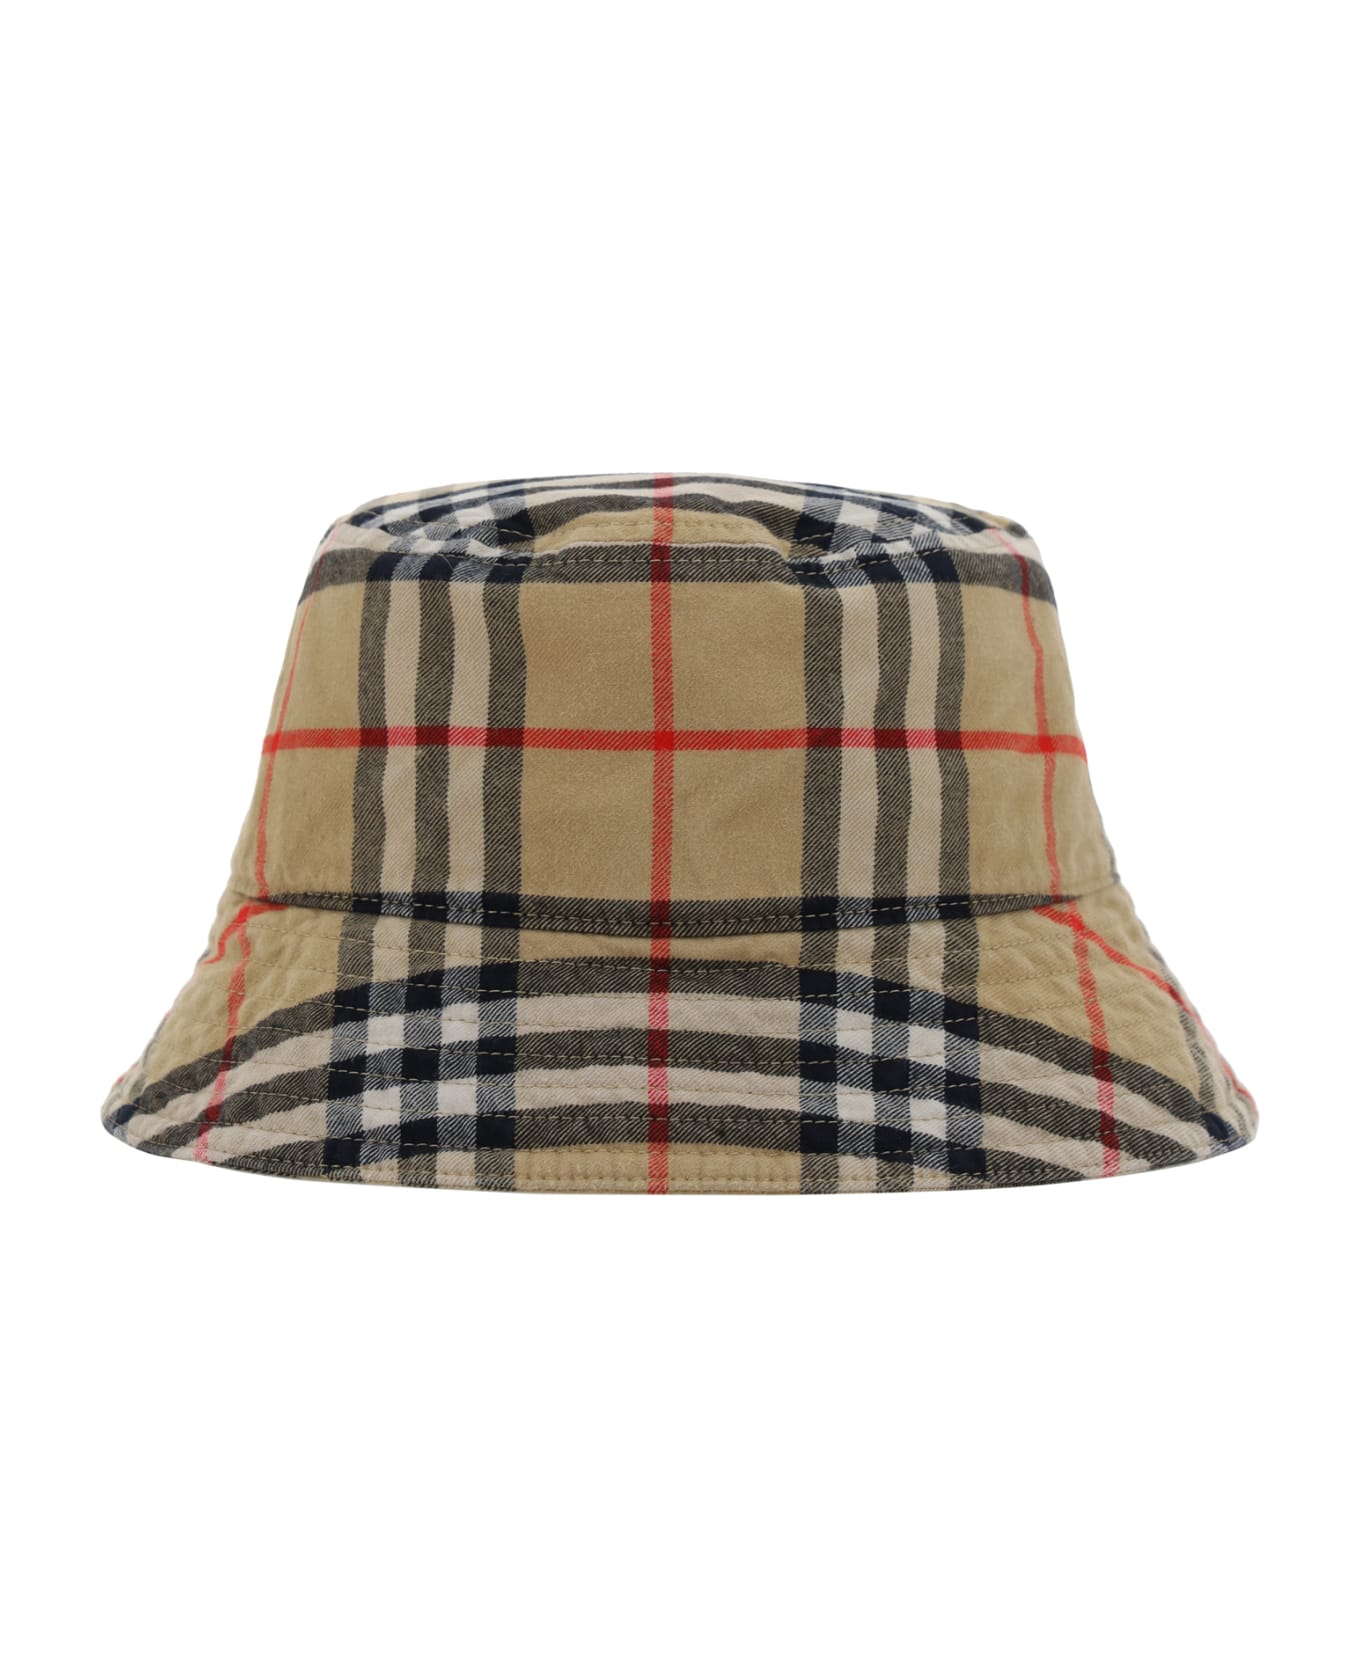 Burberry Bucket Hat Check - Archive Beige